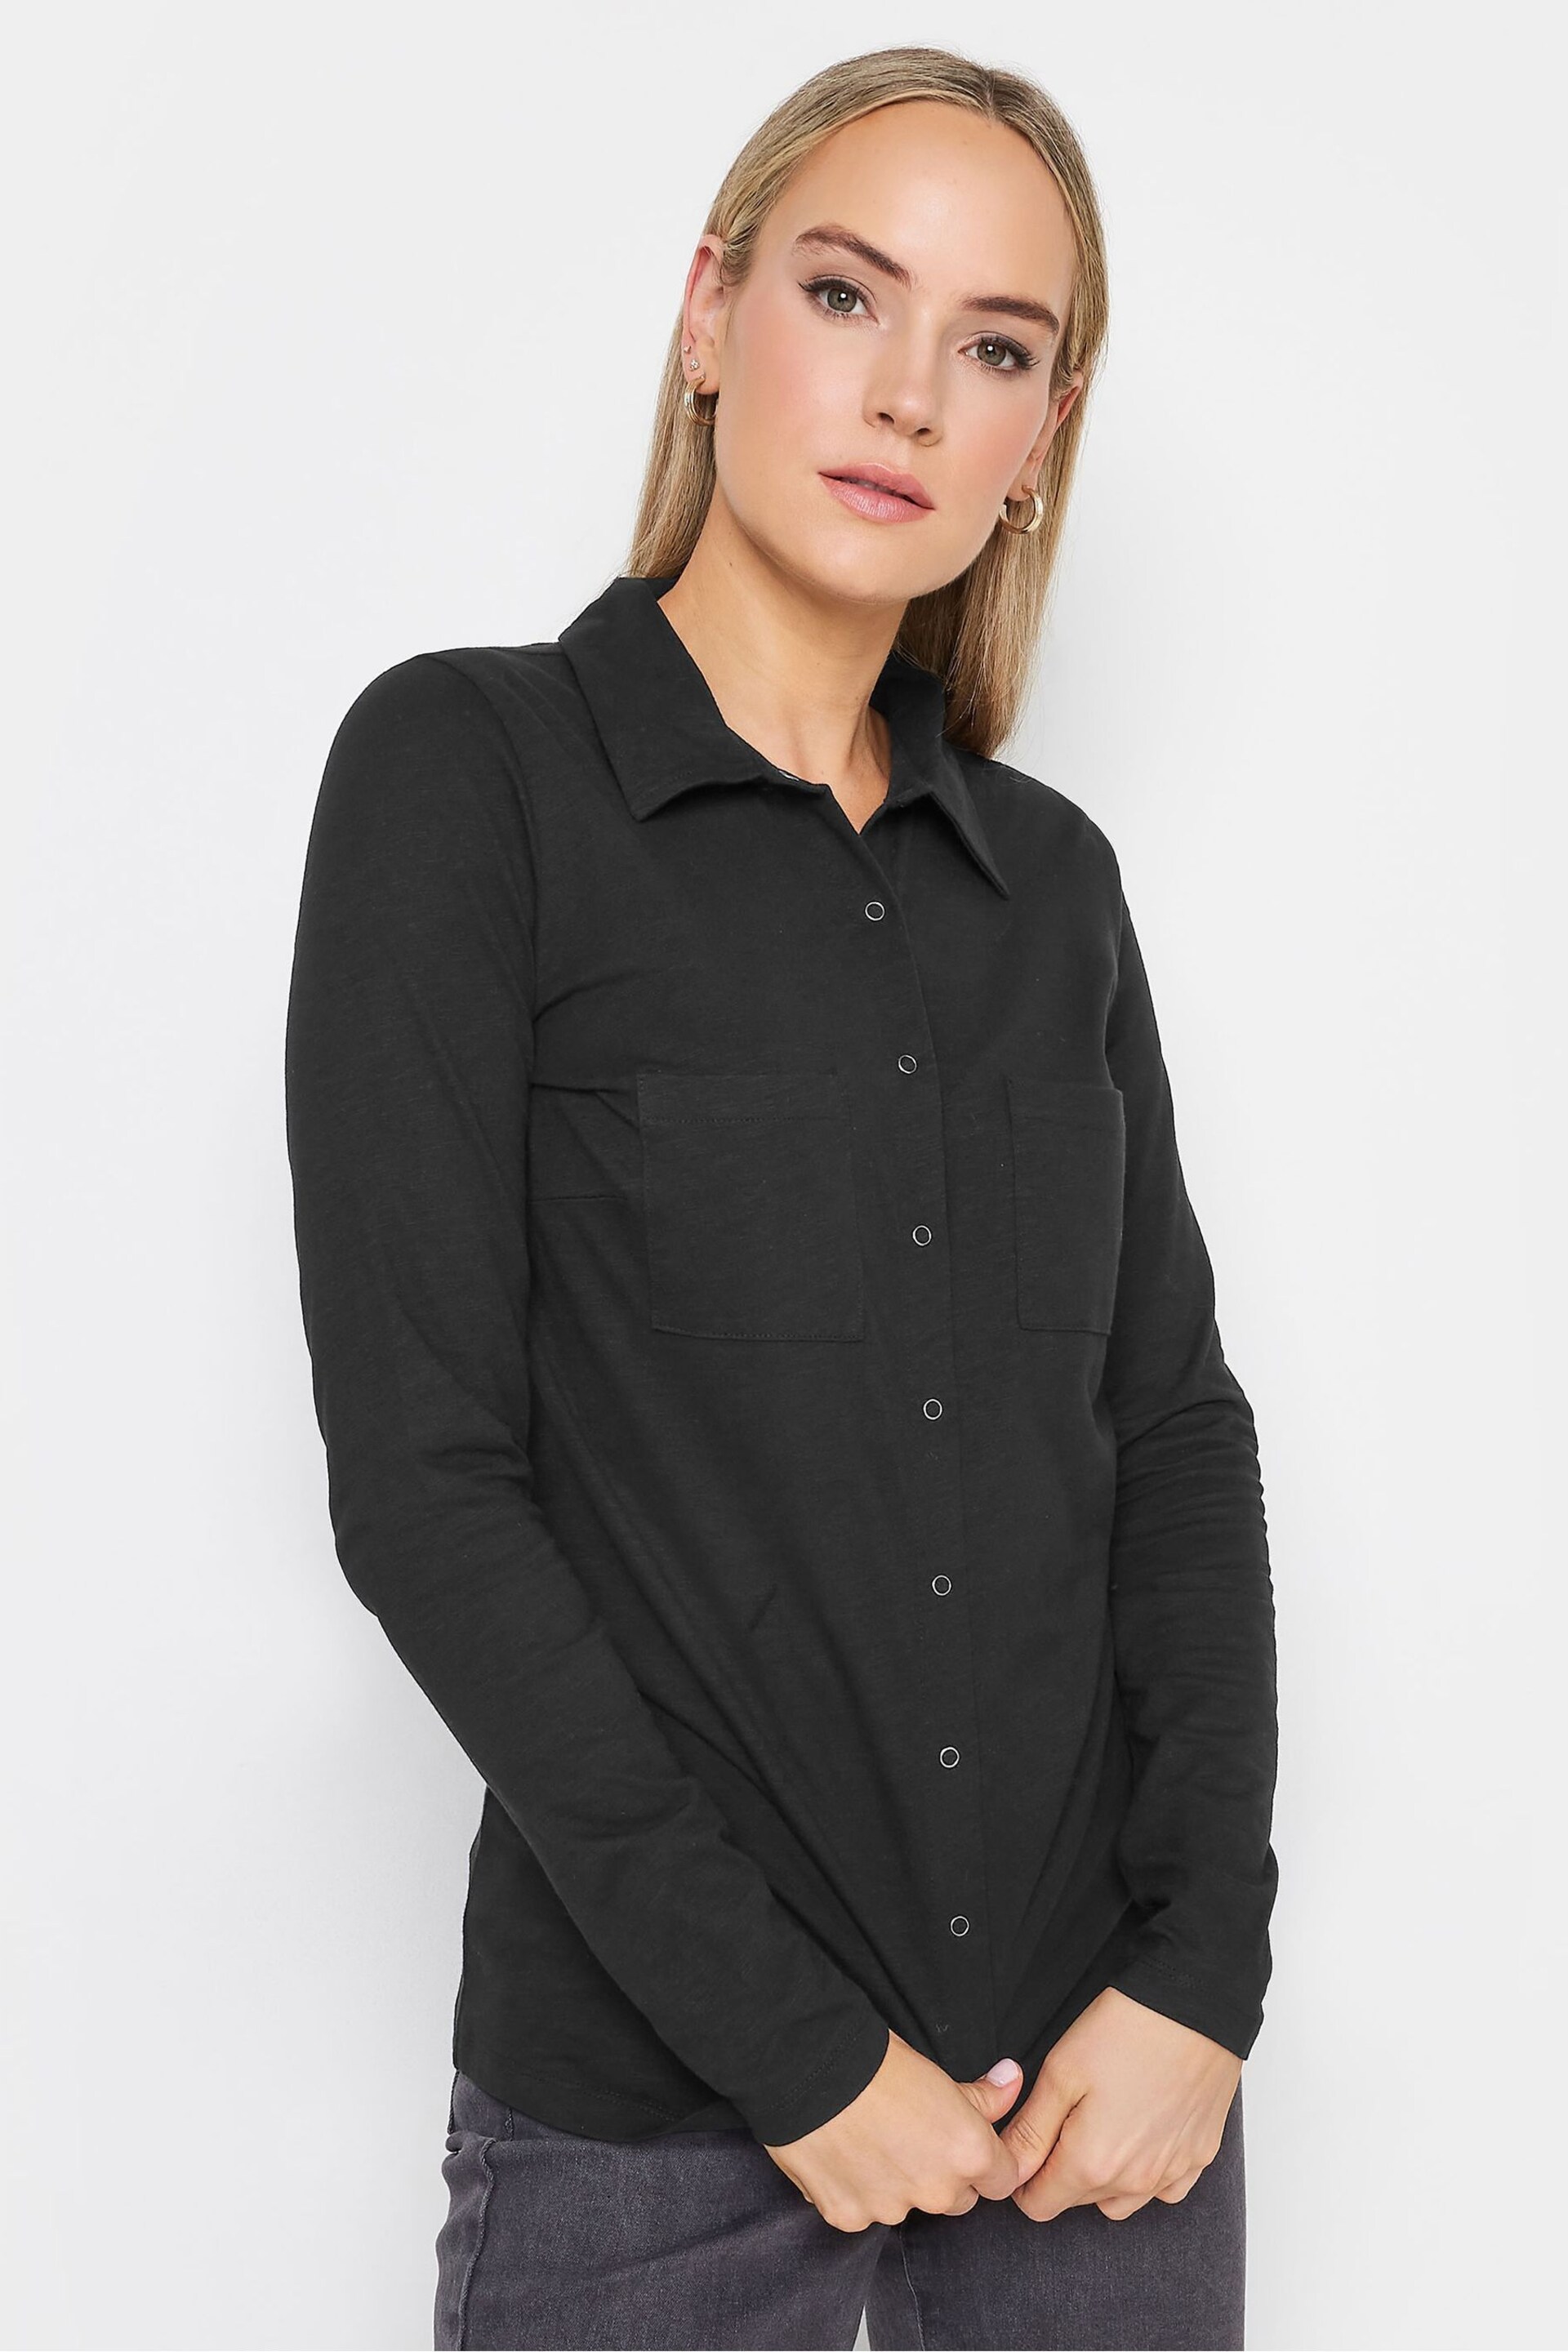 Long Tall Sally Black Cotton Jersey Shirt - Image 1 of 4